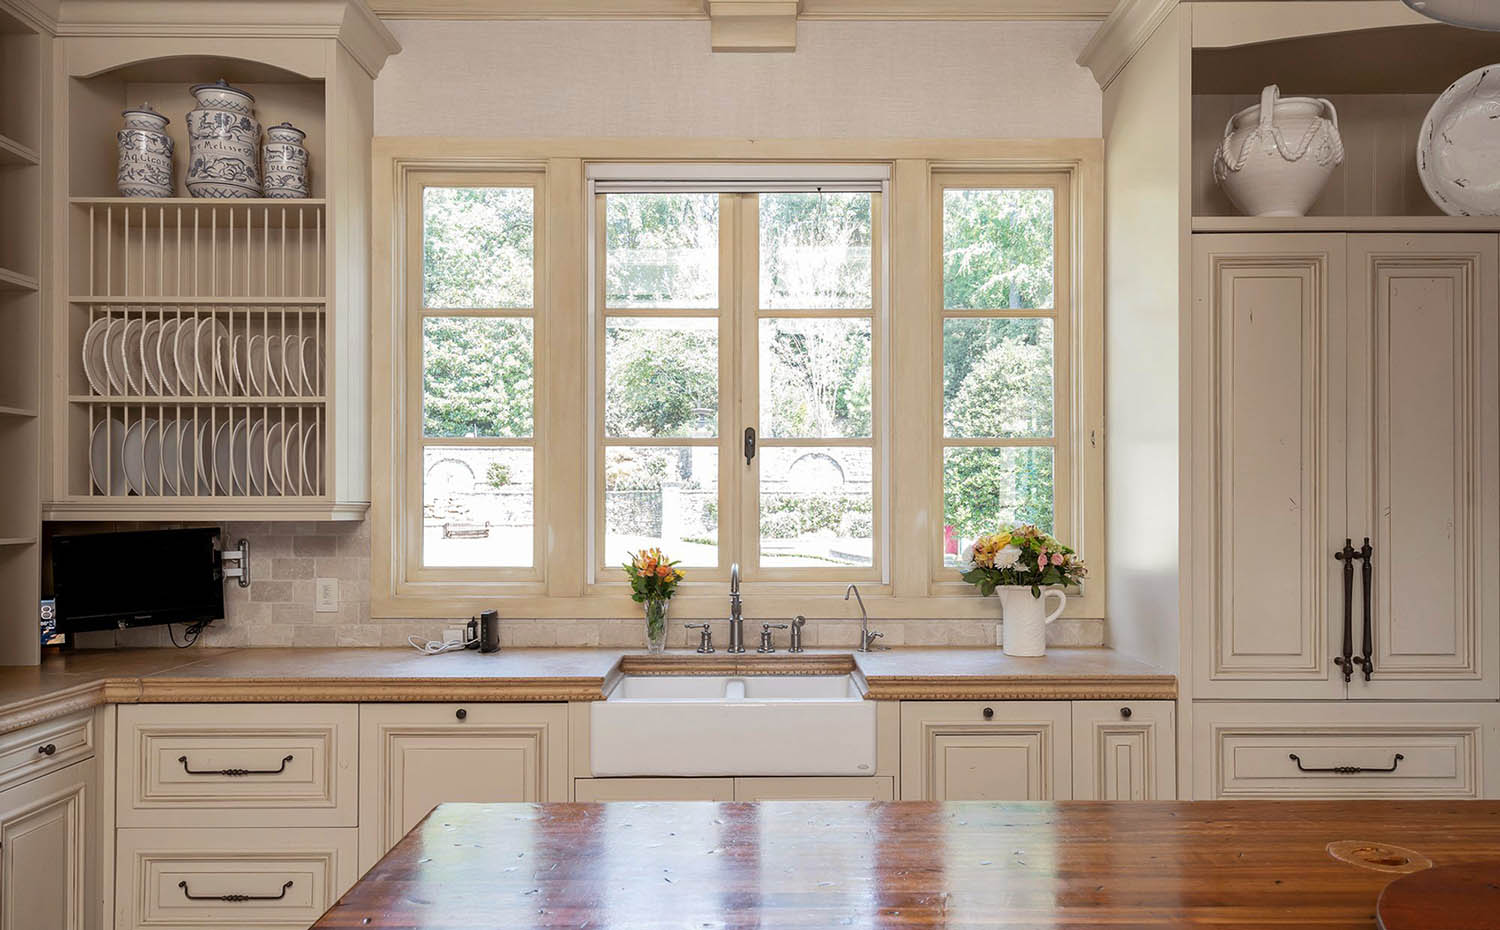 Beautiful cream colored kitchen cabinets with stone backsplash and butcher block countertops. Black hardware. Matching cream trim.